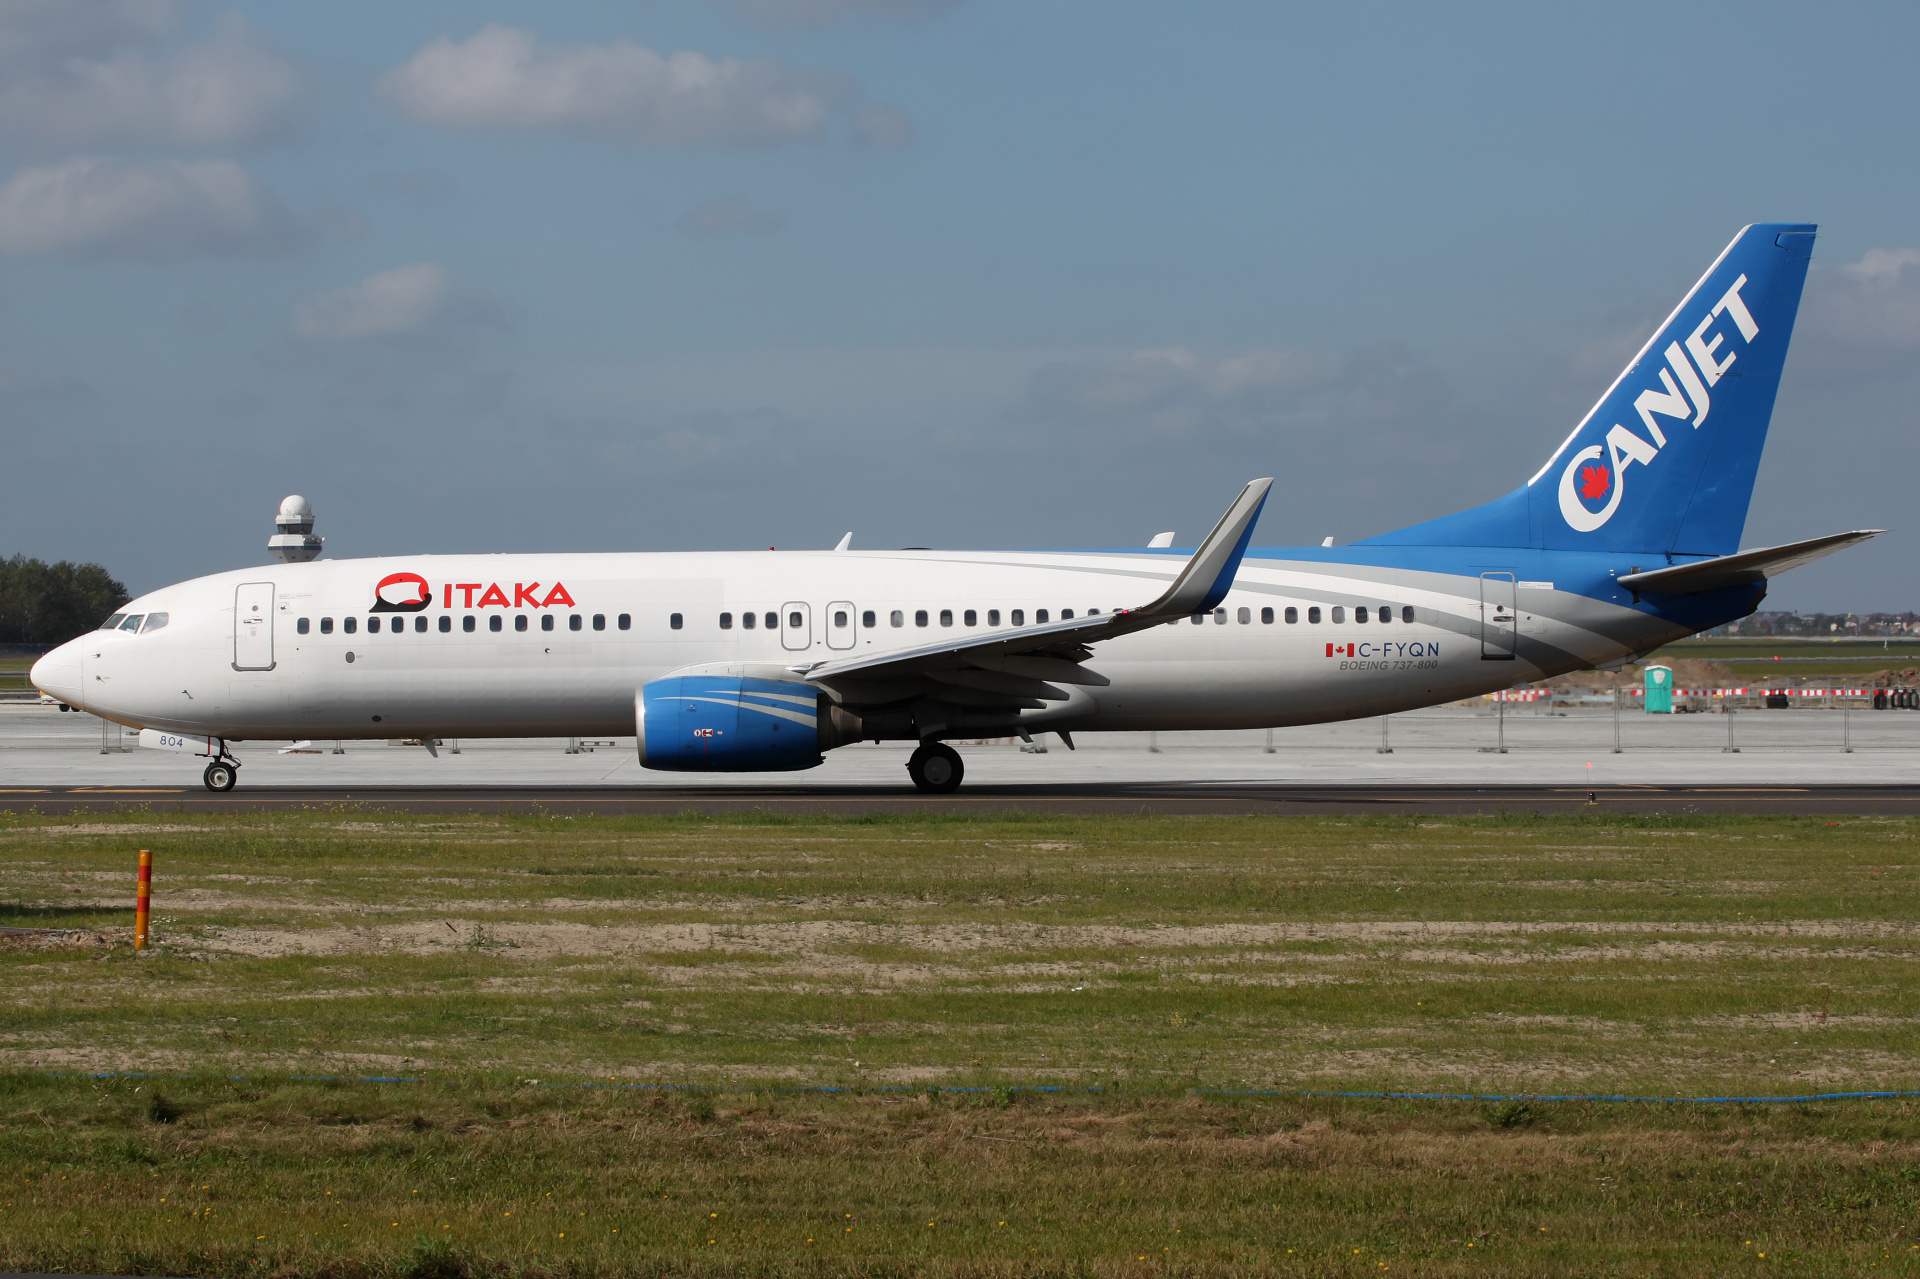 C-FYQN, CanJet (Itaka) (Aircraft » EPWA Spotting » Boeing 737-800)